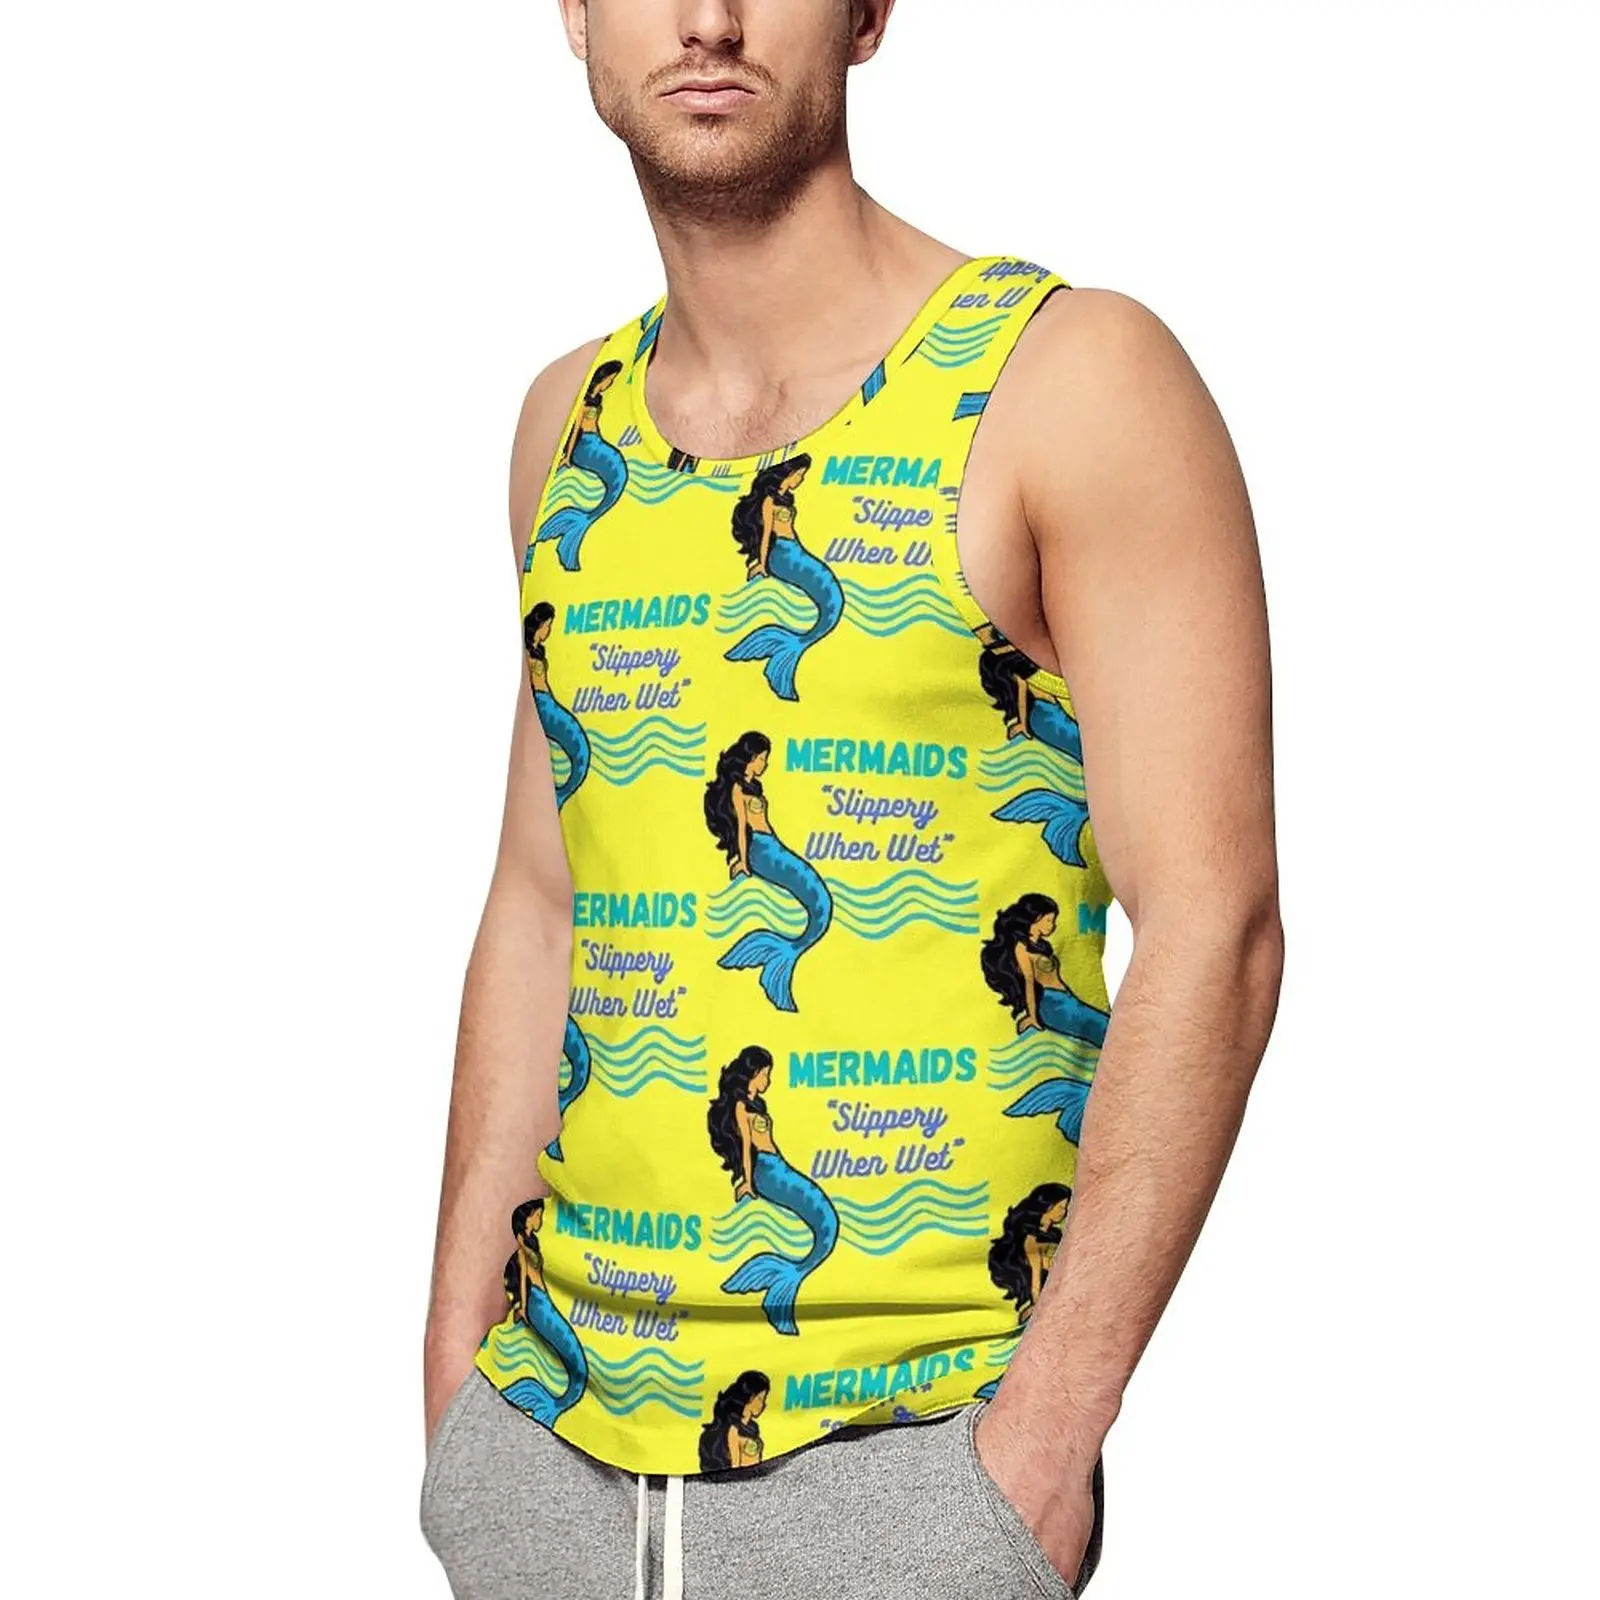 

Mermaids Tank Top Male Slippery When Wet Sportswear Tops Beach Gym Graphic Sleeveless Shirts Large Size 4XL 5XL